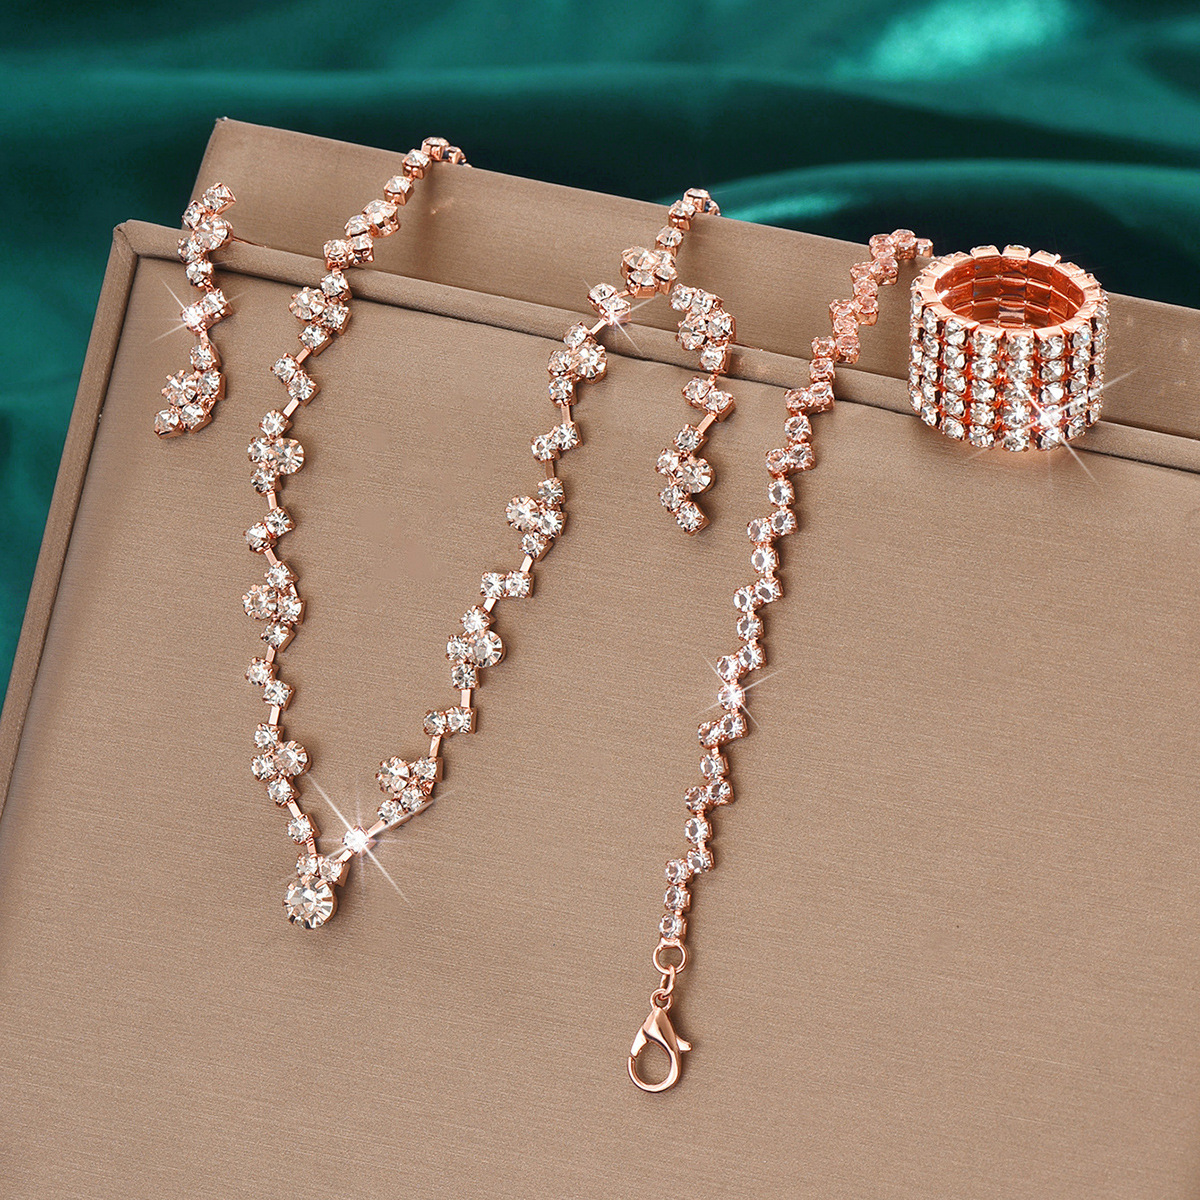 6:424785424-5 Rose gold necklace earrings bracelet ring set